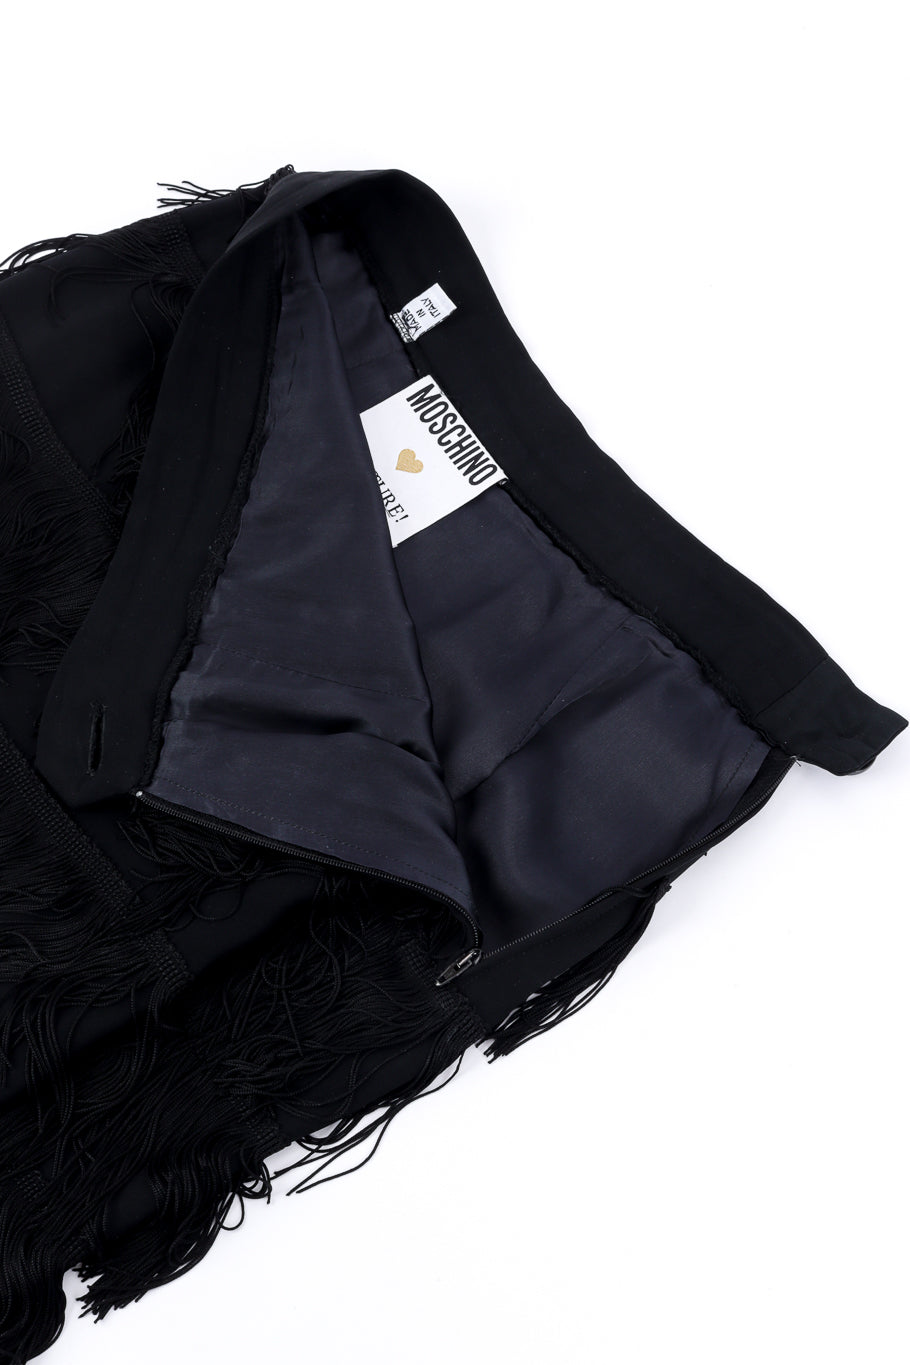 Vintage Moschino Couture Fringe Jacket and Skirt Set skirt unzipped @recessla